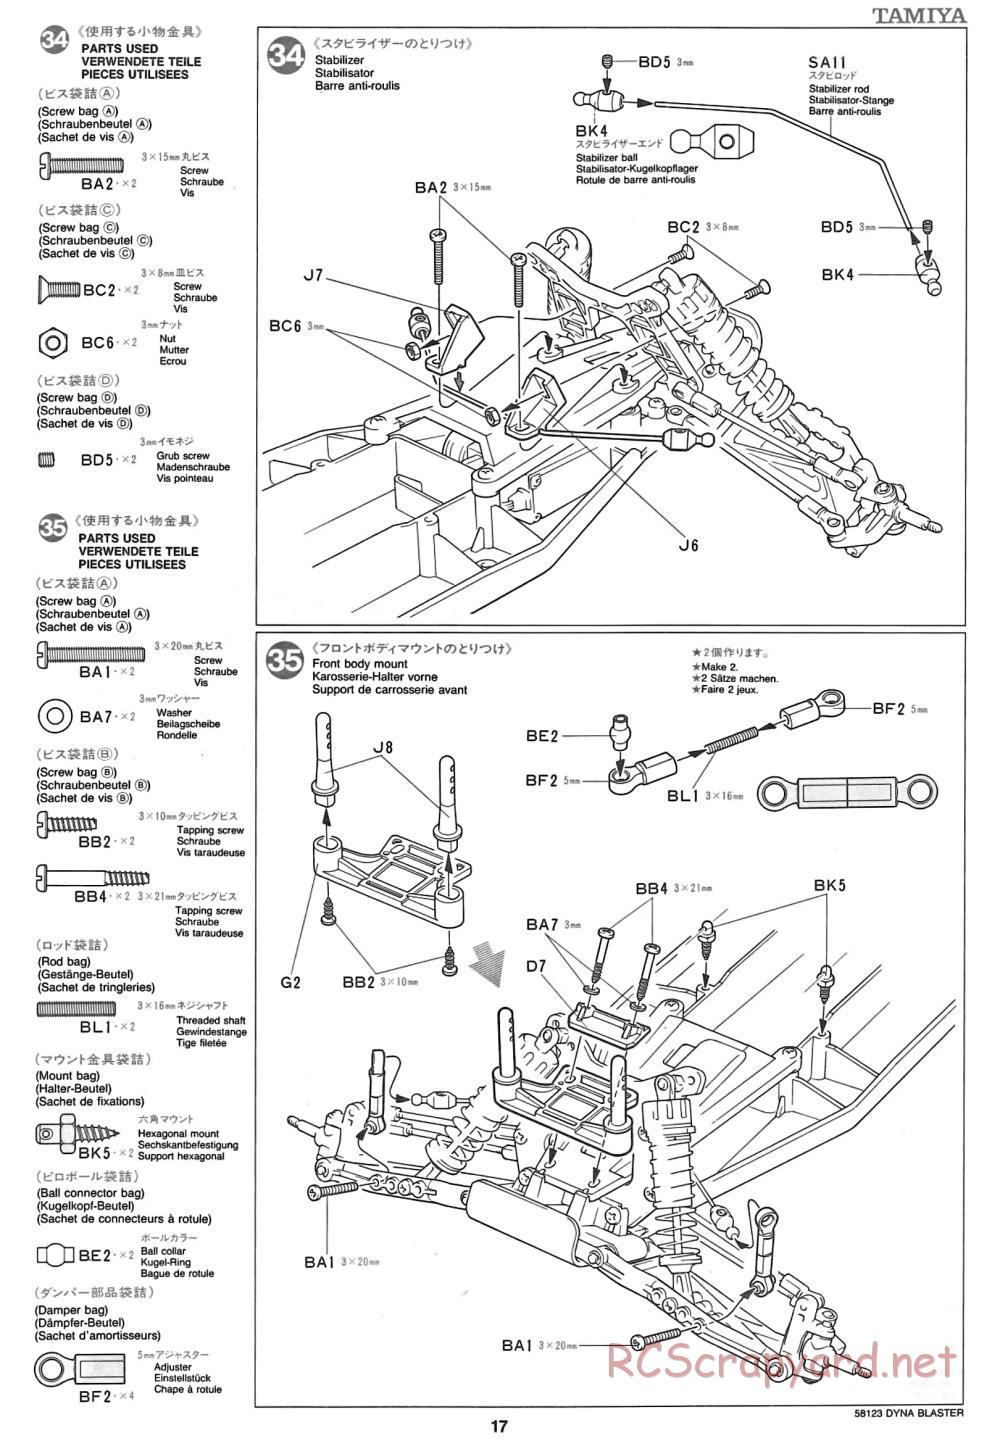 Tamiya - Dyna Blaster Chassis - Manual - Page 17